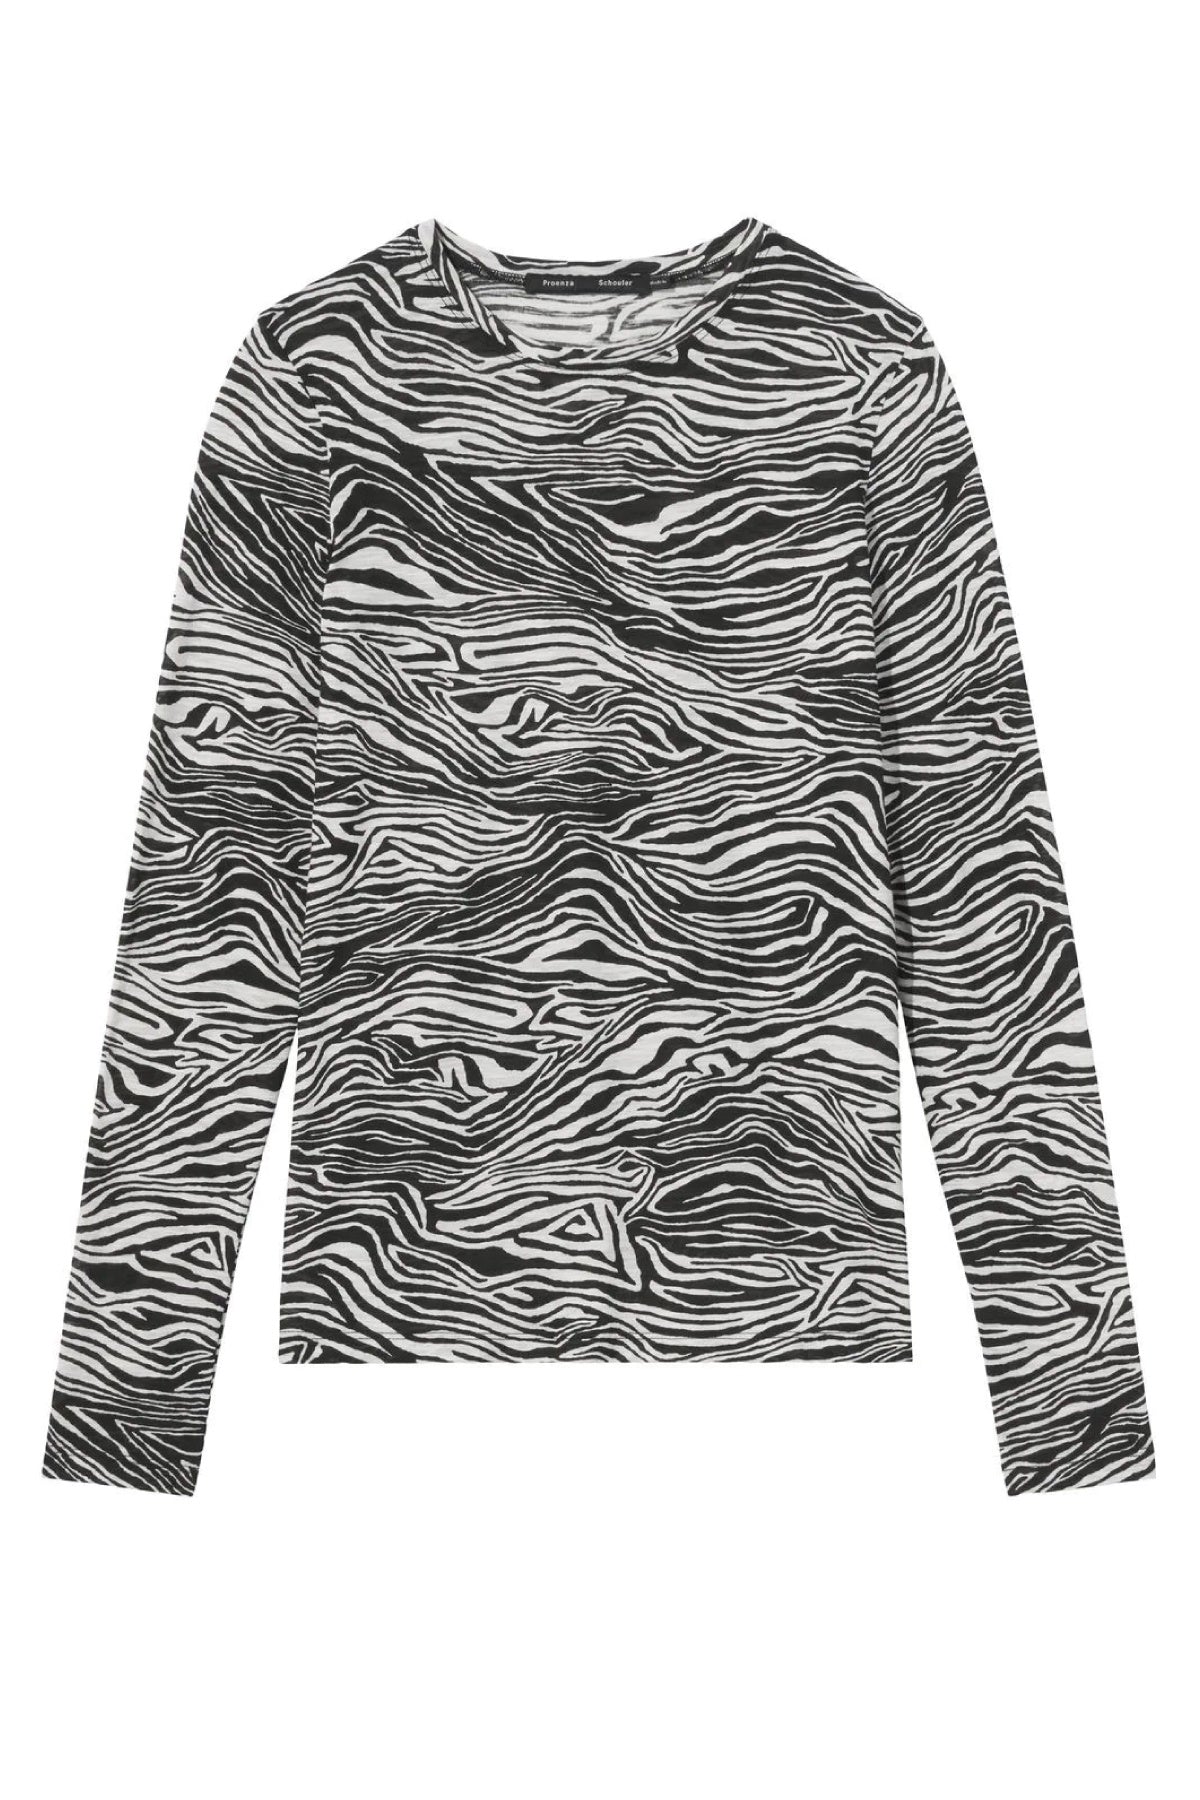 Proenza Schouler Printed Zebra Long Sleeve T-Shirt - Ecru/ Black